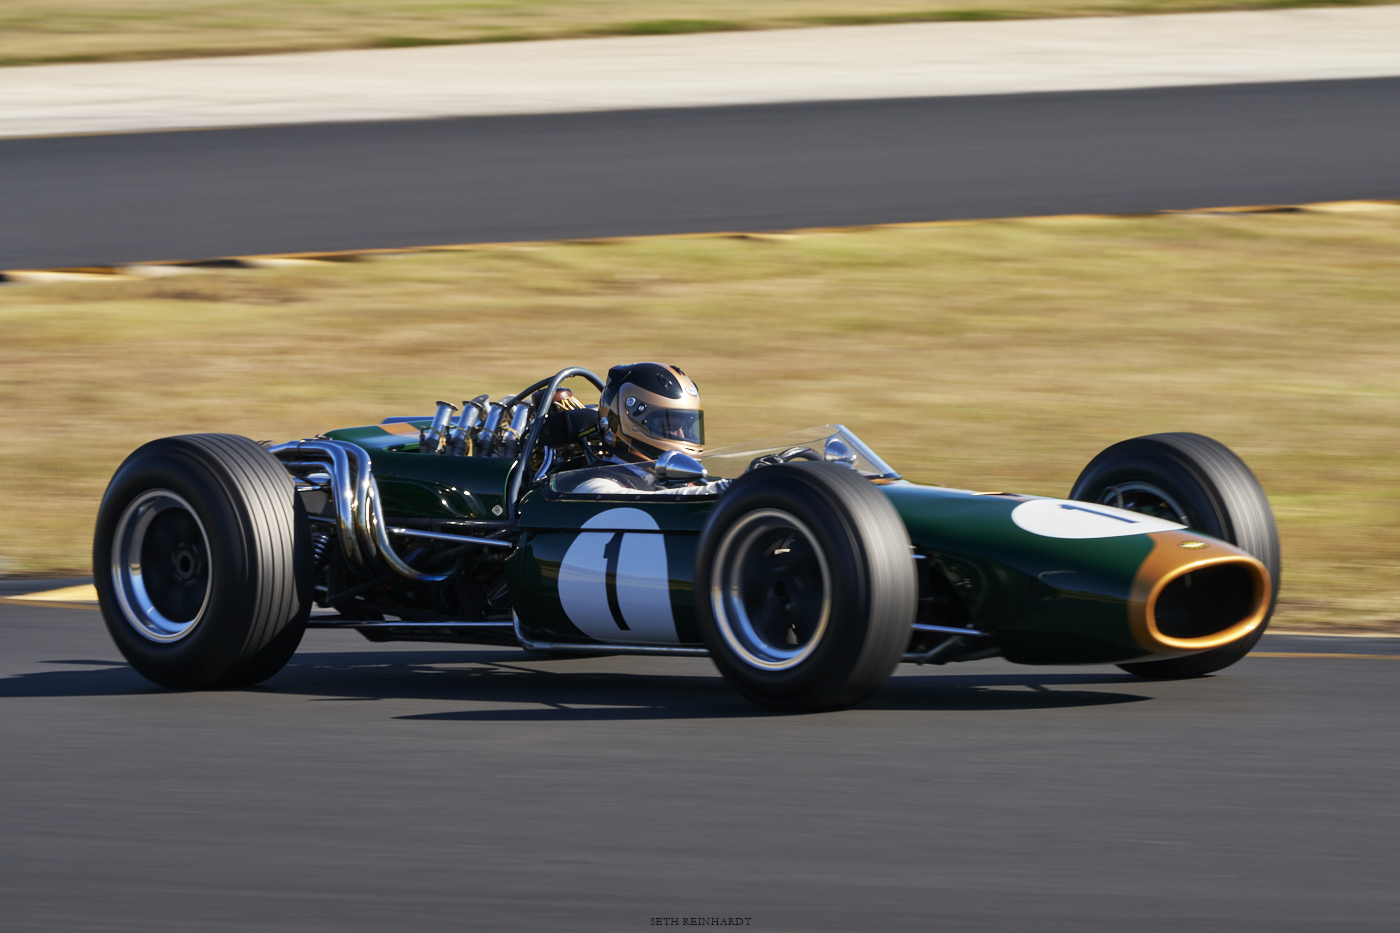 2021 HSRCA Sydney Classic Brabham BT66